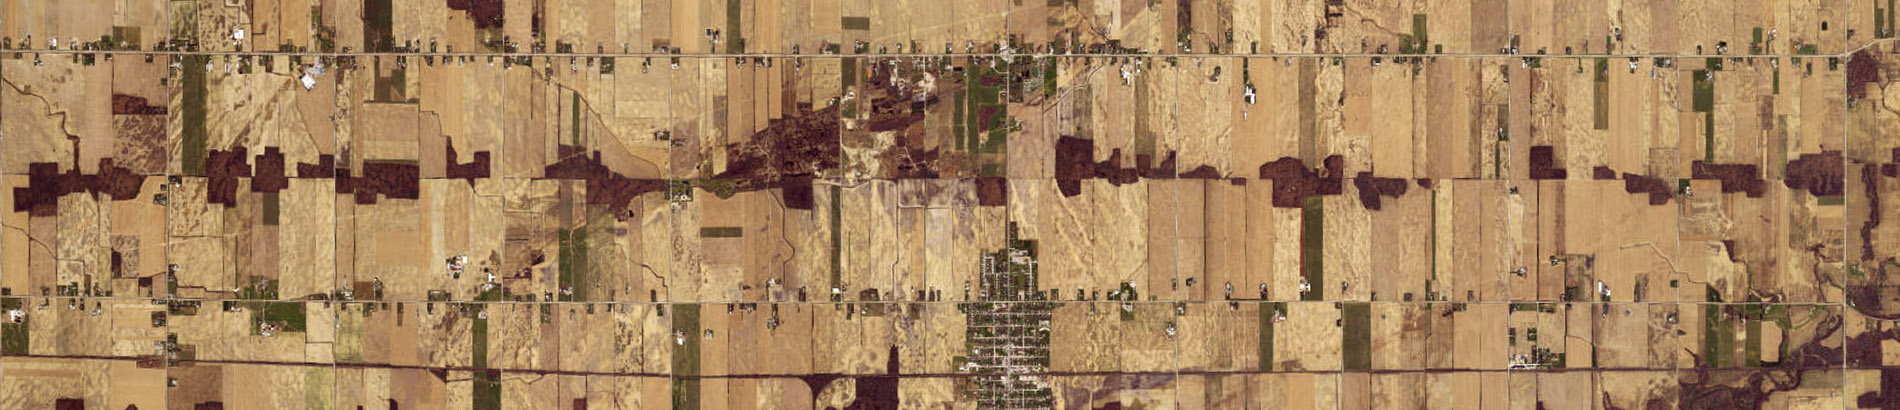 Aerial image of farmland